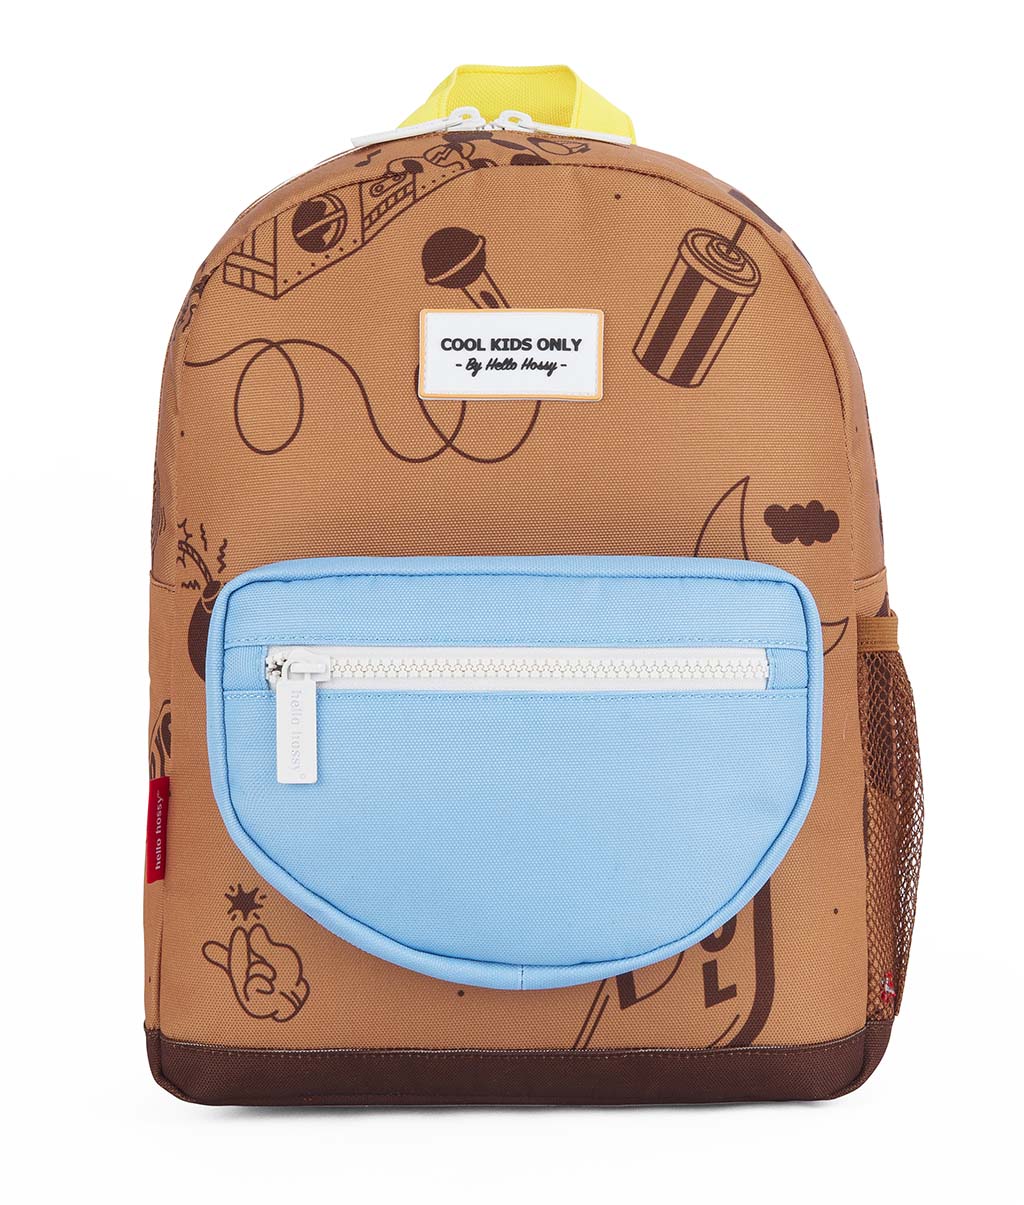 Groovy backpack